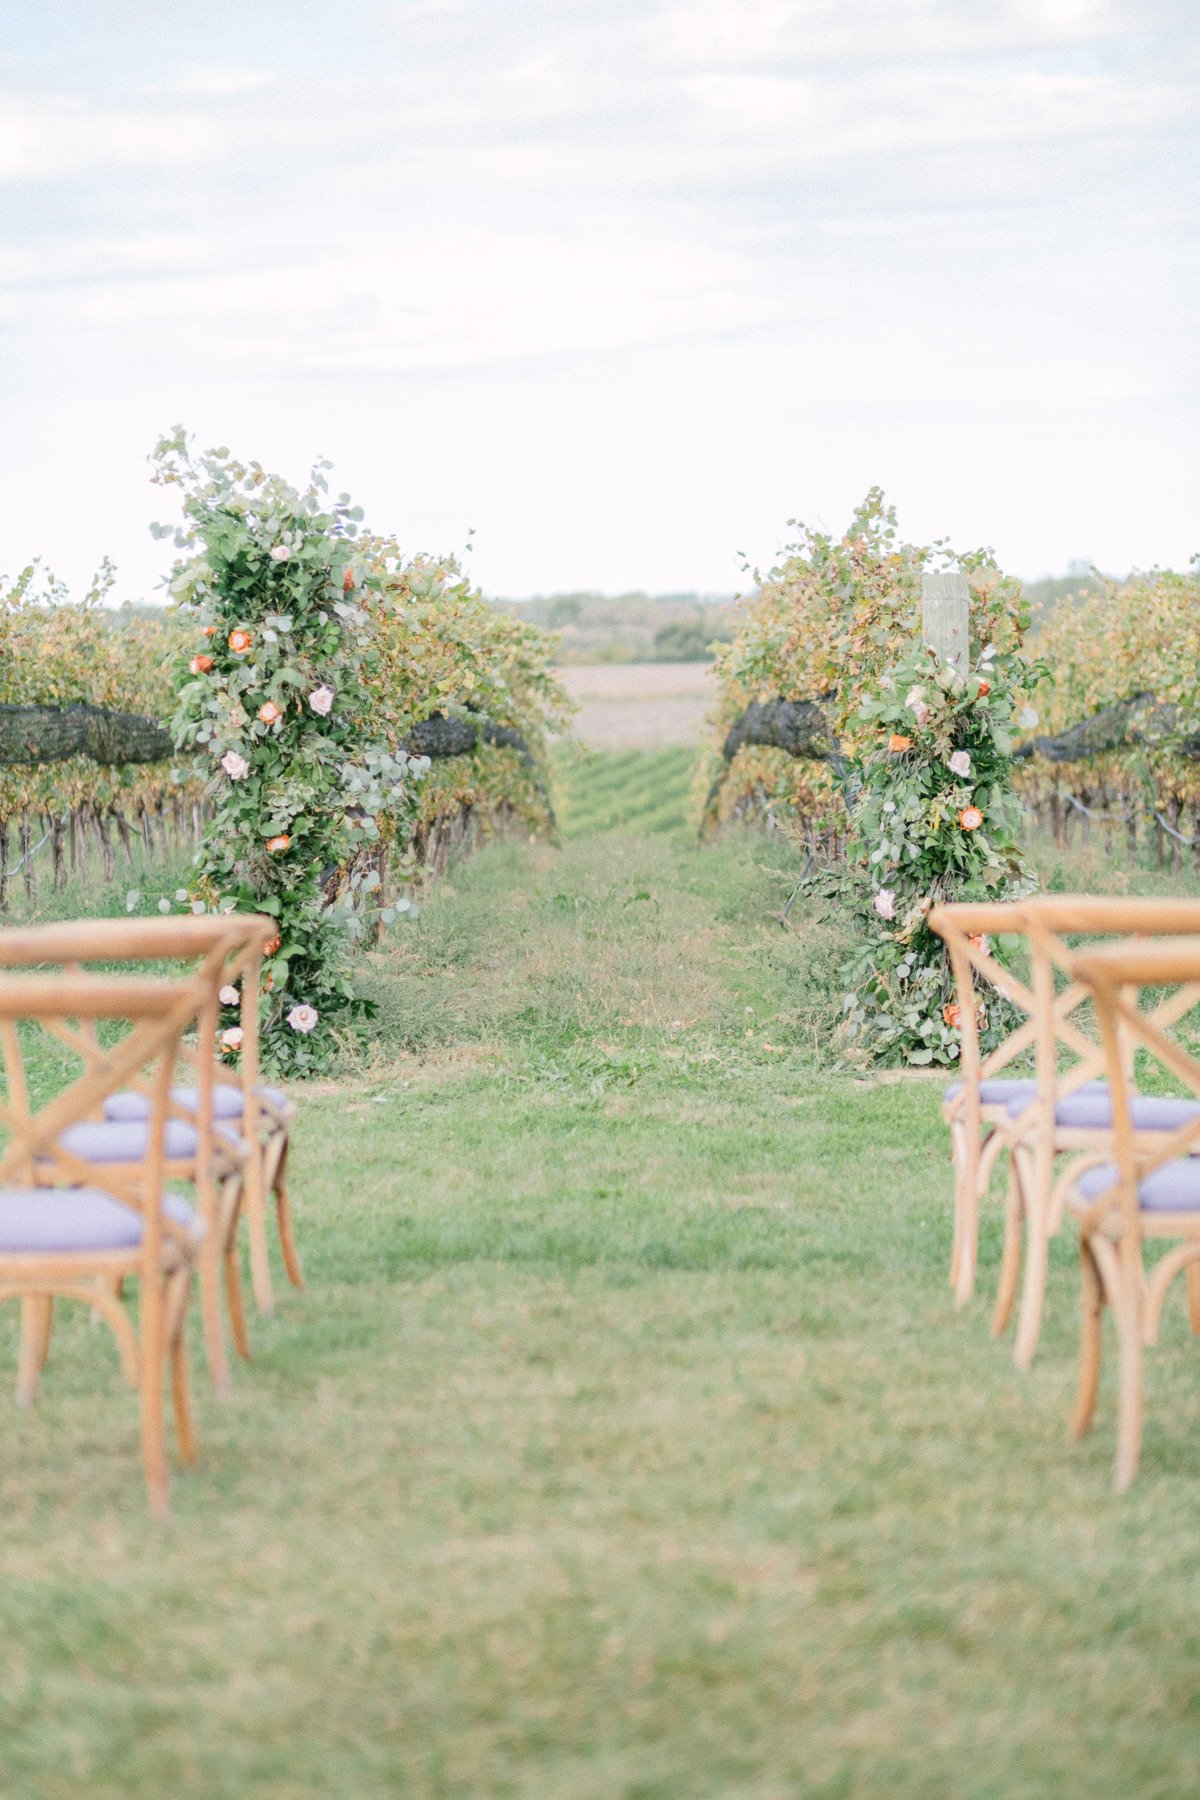 Ravine-Vineyard-Editorial-Wedding-Vineyard-Bride-Photo-By-Paolo-Manrique-Photography-0080.JPG